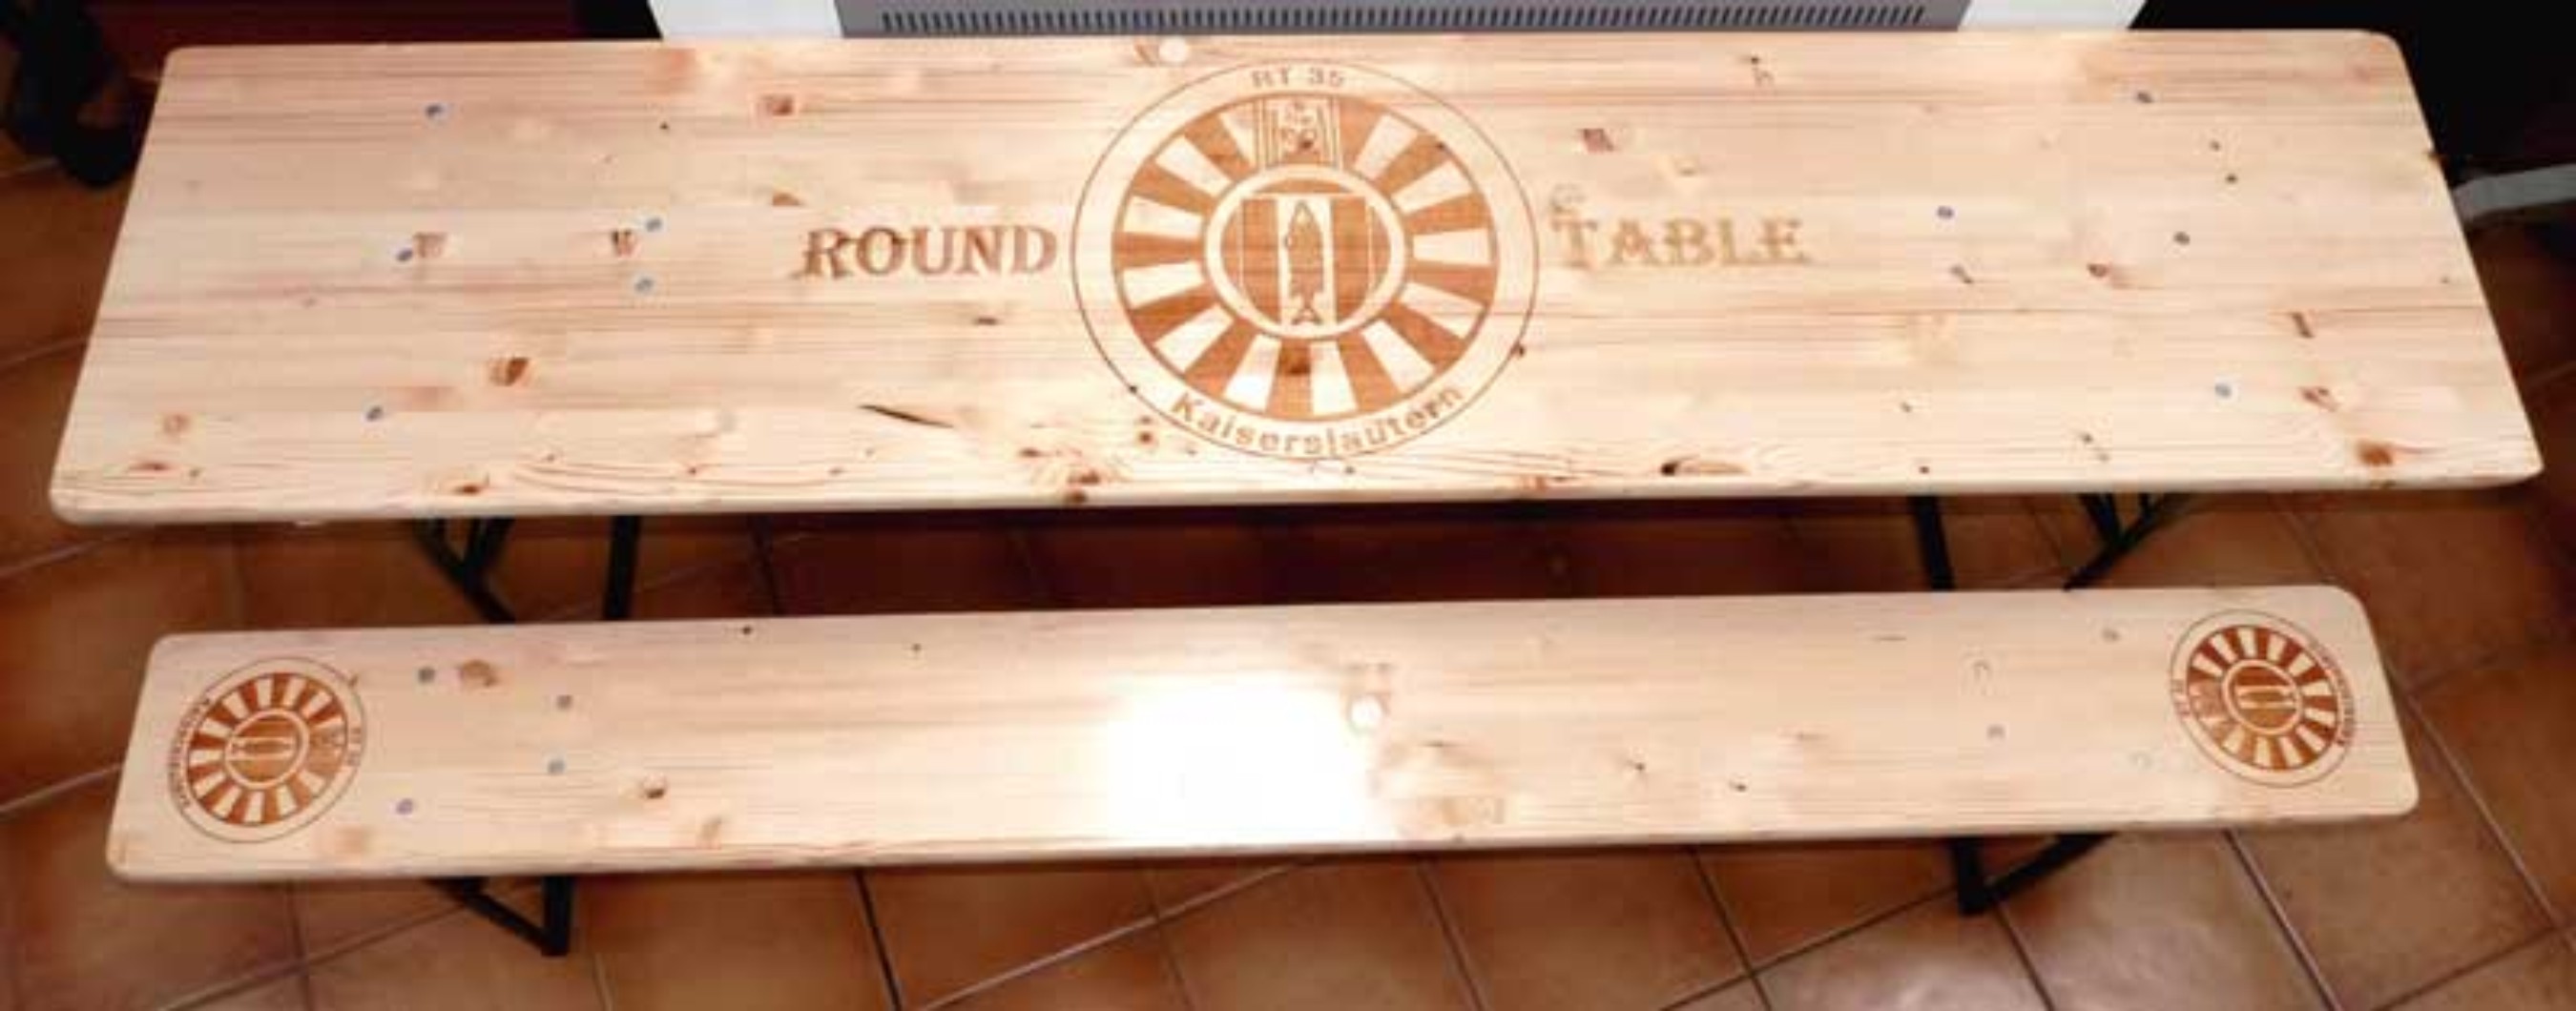 Beer Table Beer Bench Regulars Table Engraved Engraving Rt 35